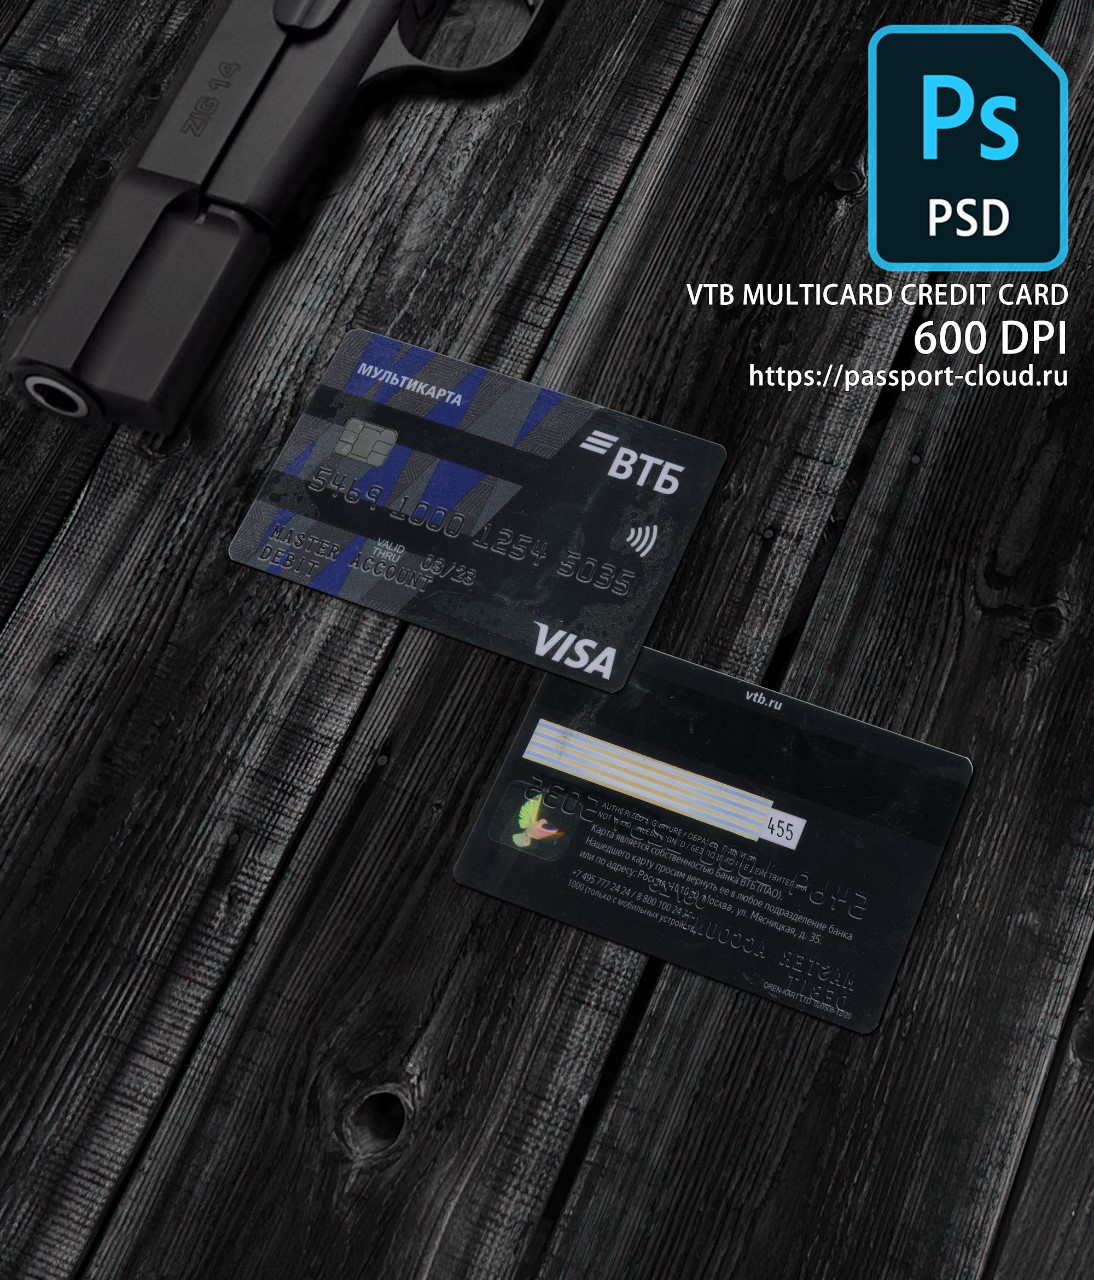 VTB Multicard Credit Card PSD1